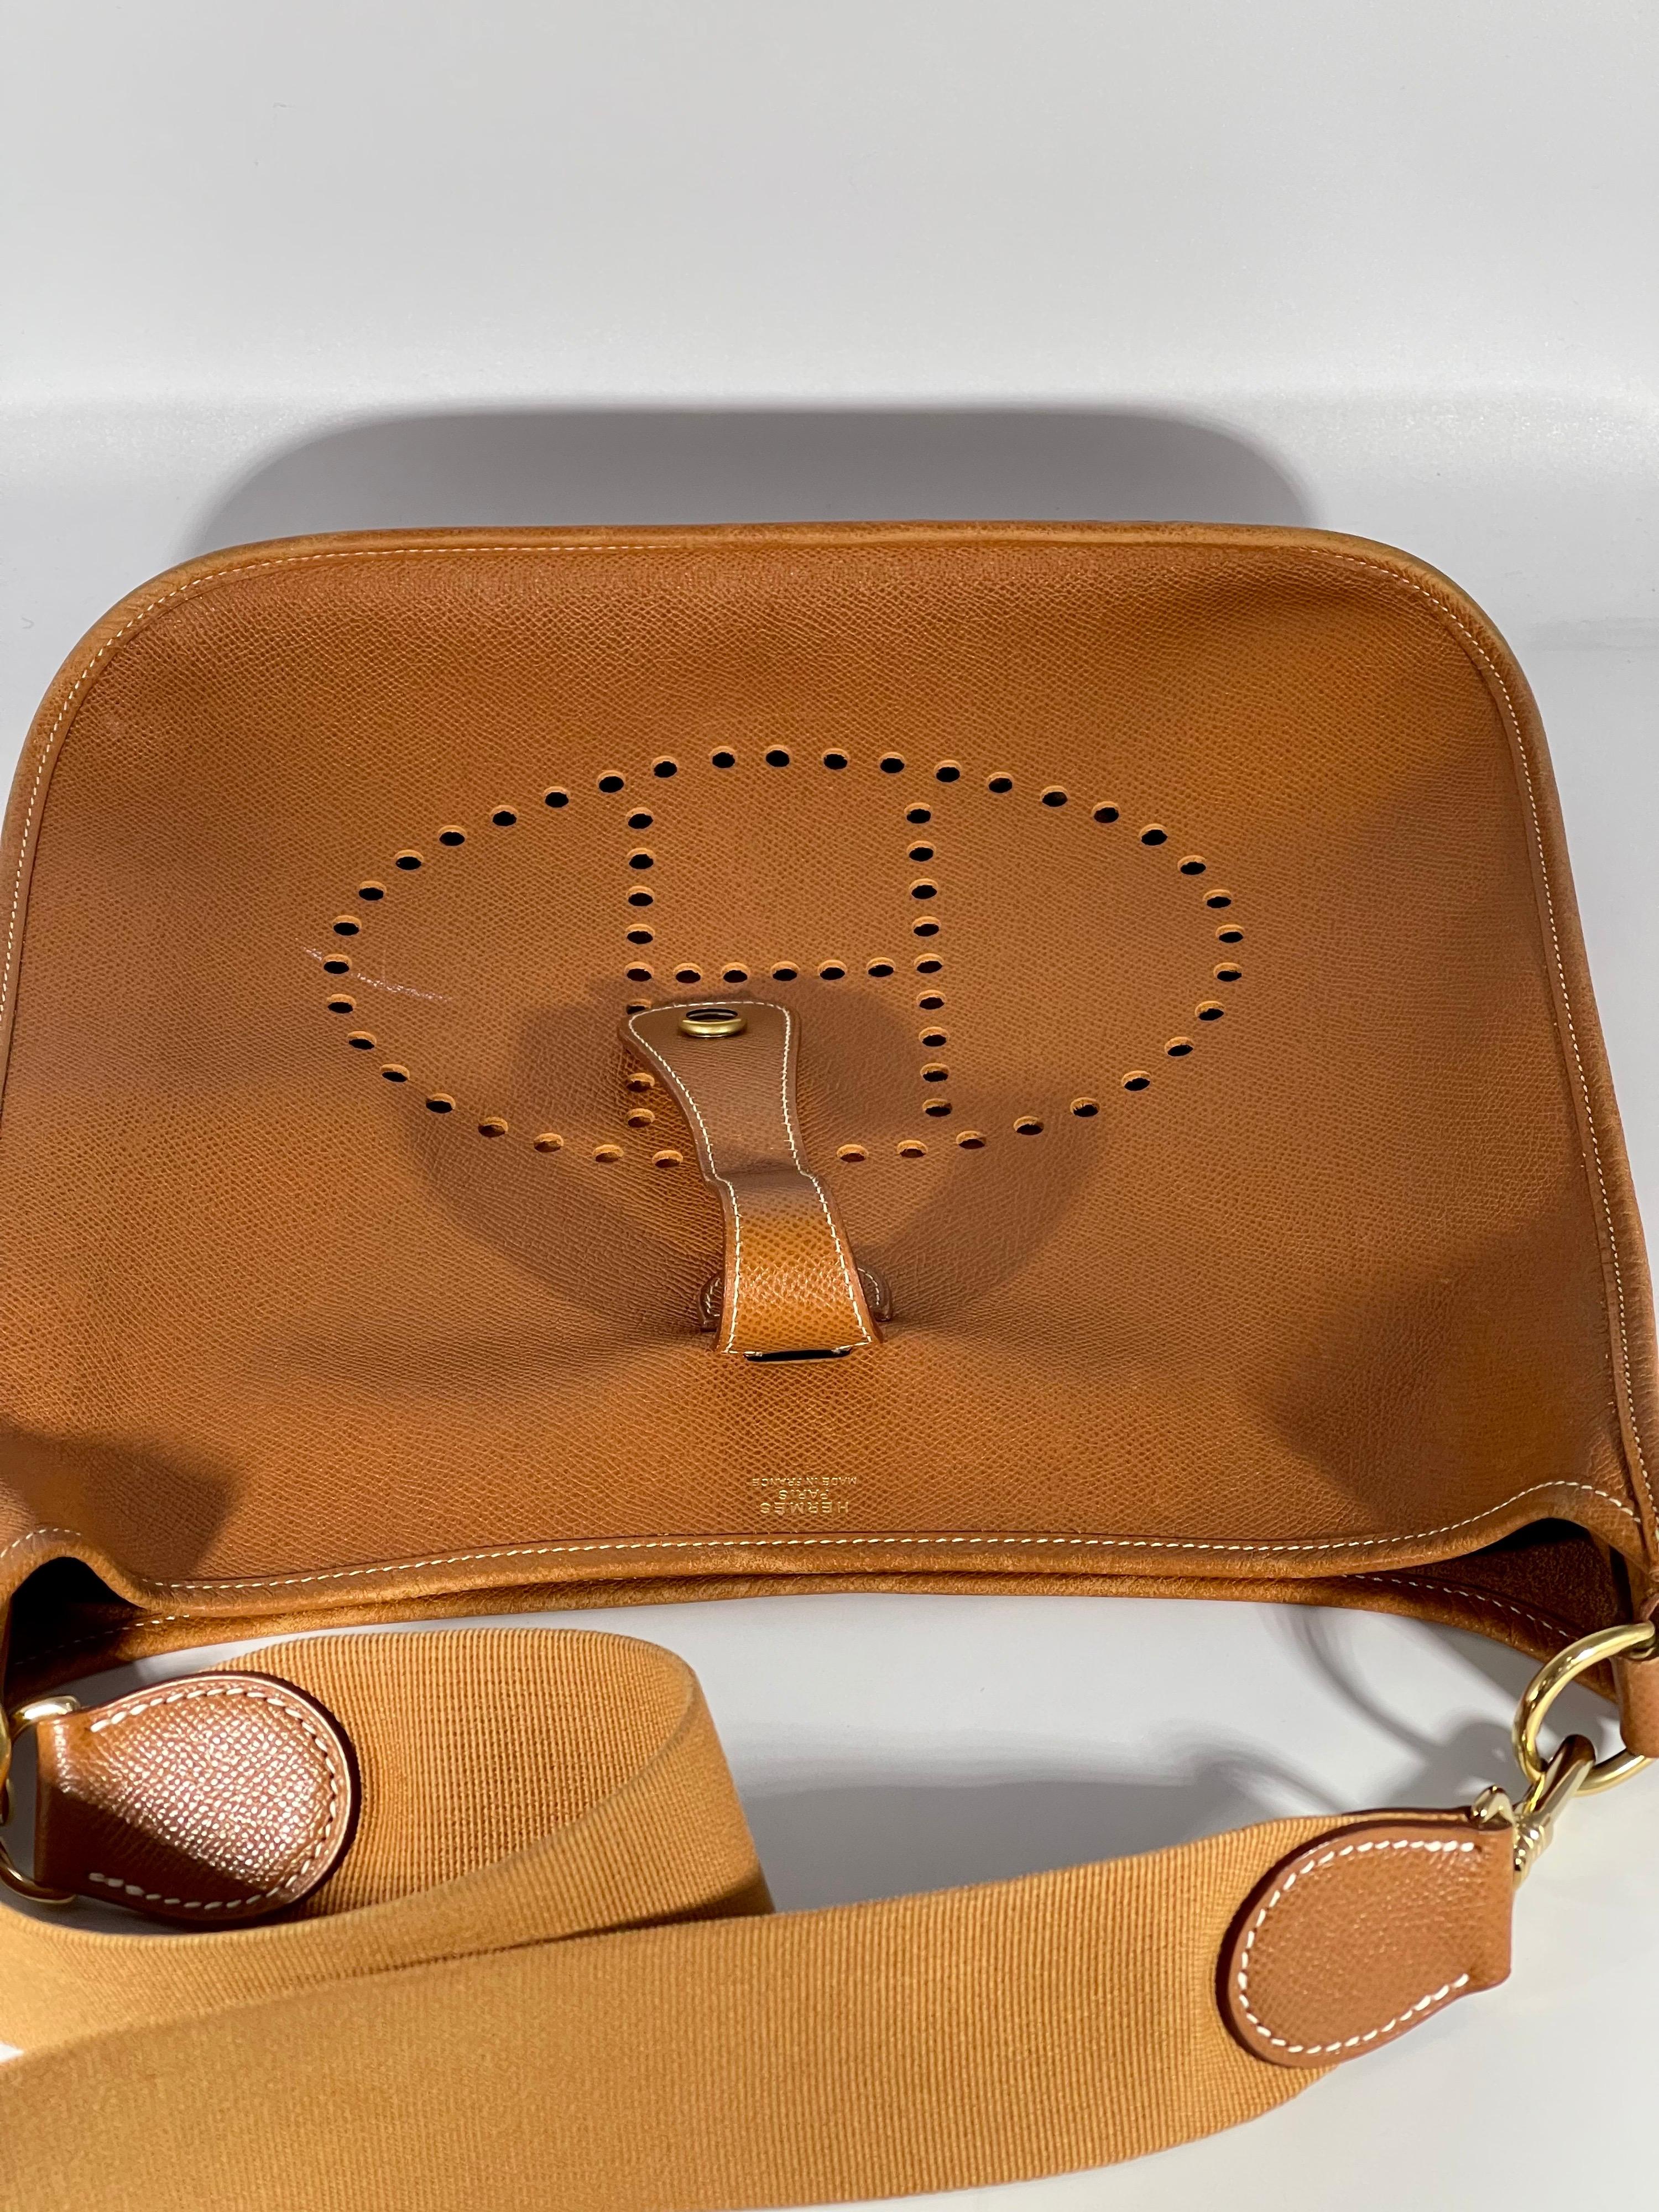 Hermès Evelyne Pm Brown Leather Cross Body Bag 3